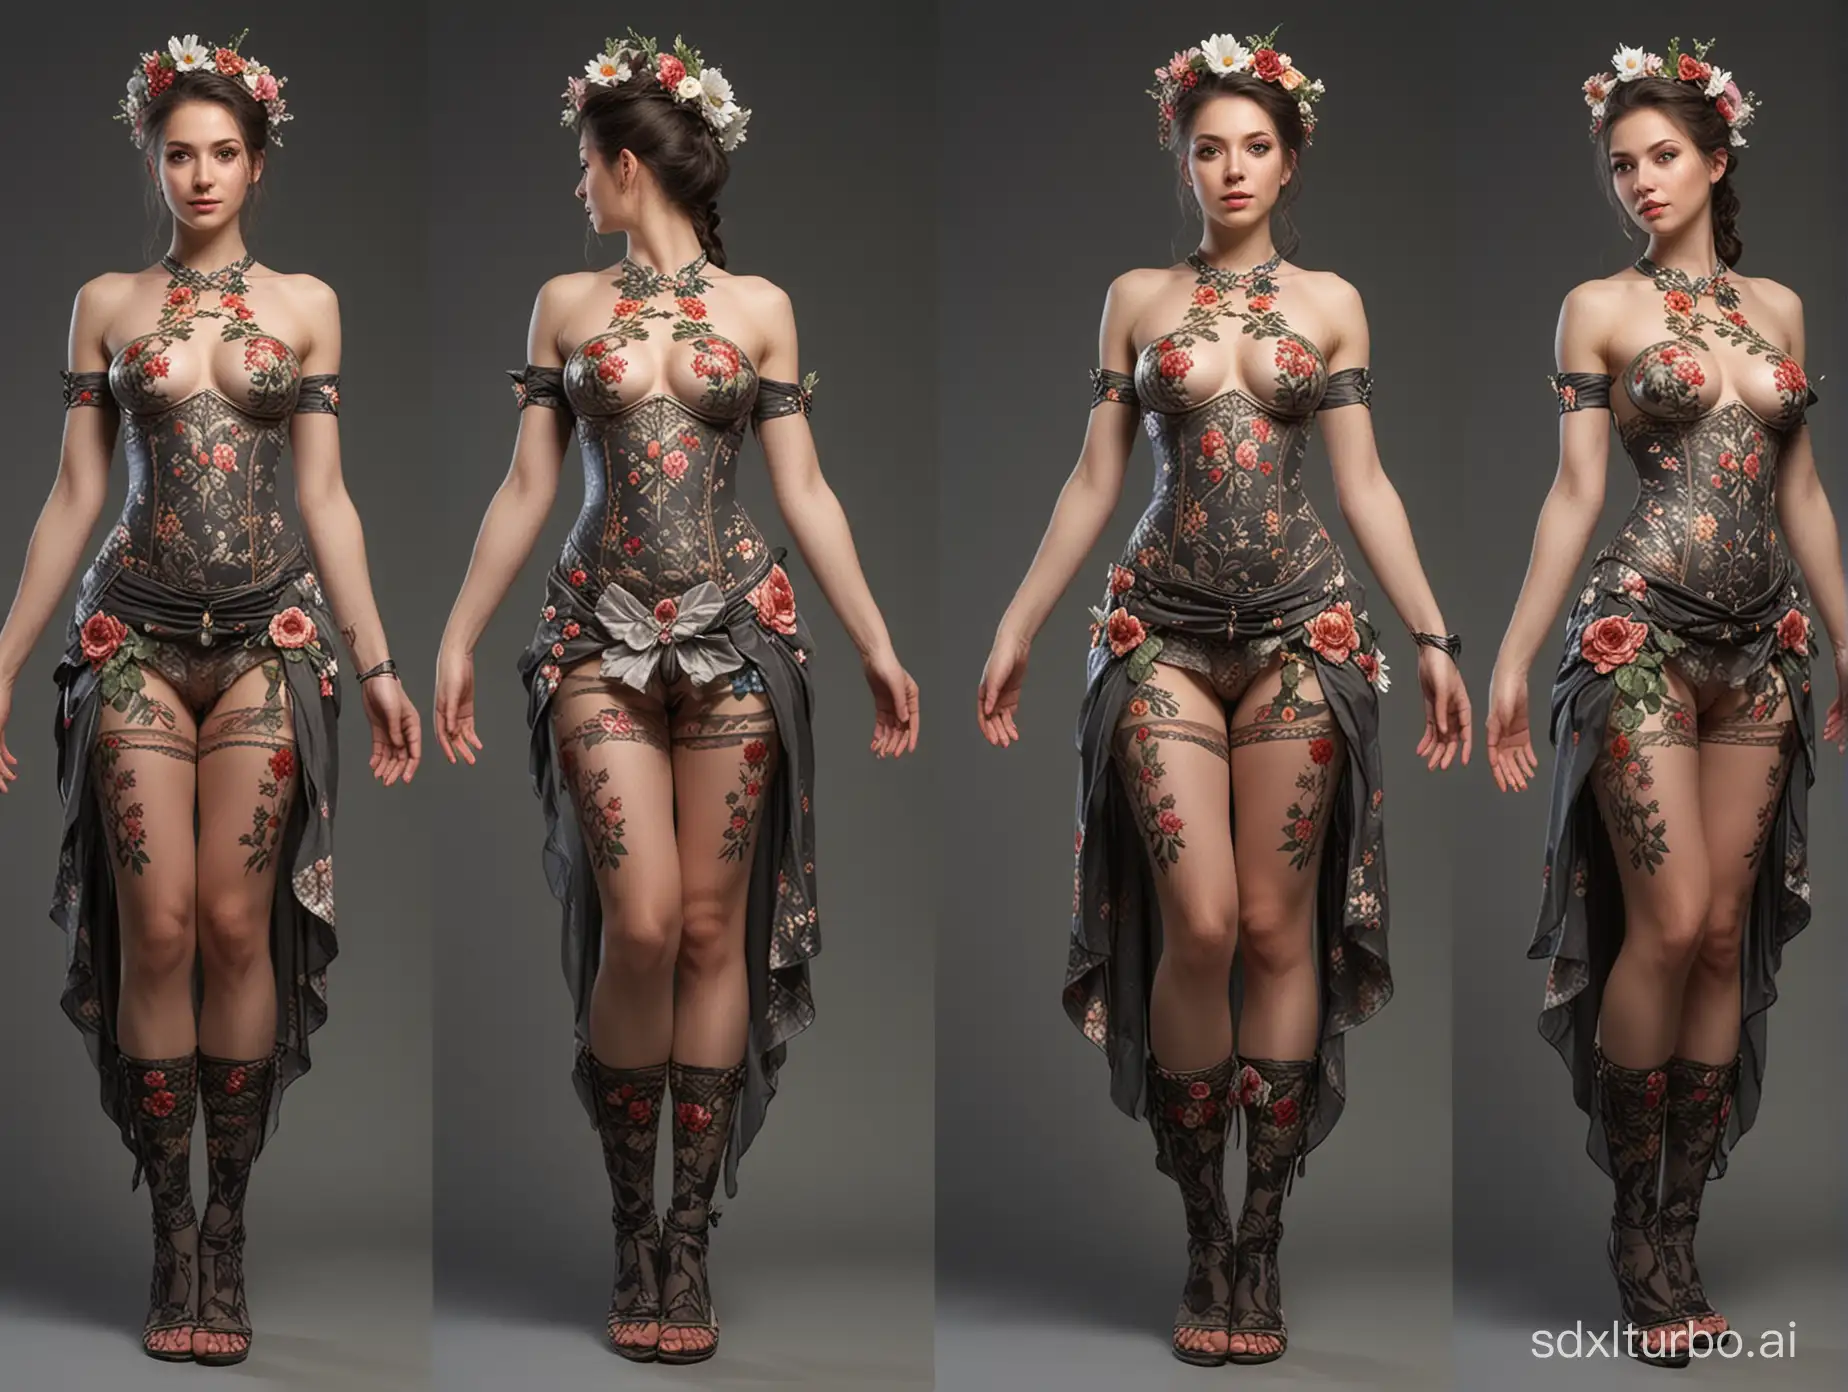 Dark-Fantasy-Priestess-in-FlowerDecorated-Attire-and-Stockings